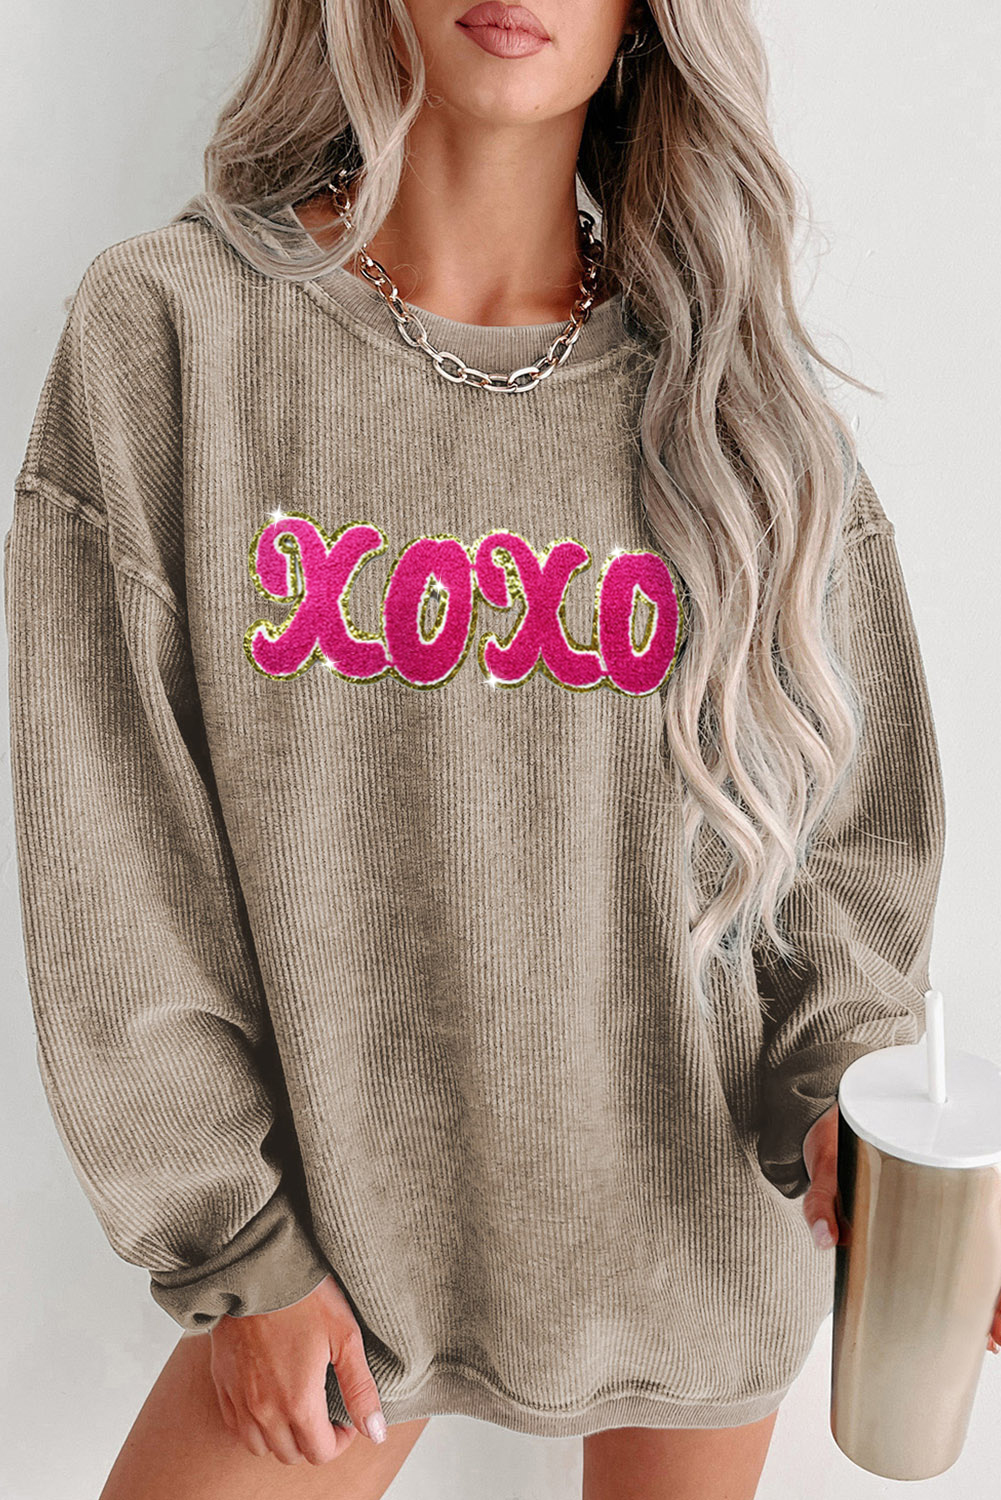  Khaki Corded xoxo Chenille Glitter PATCHES Graphic Sweatshirt